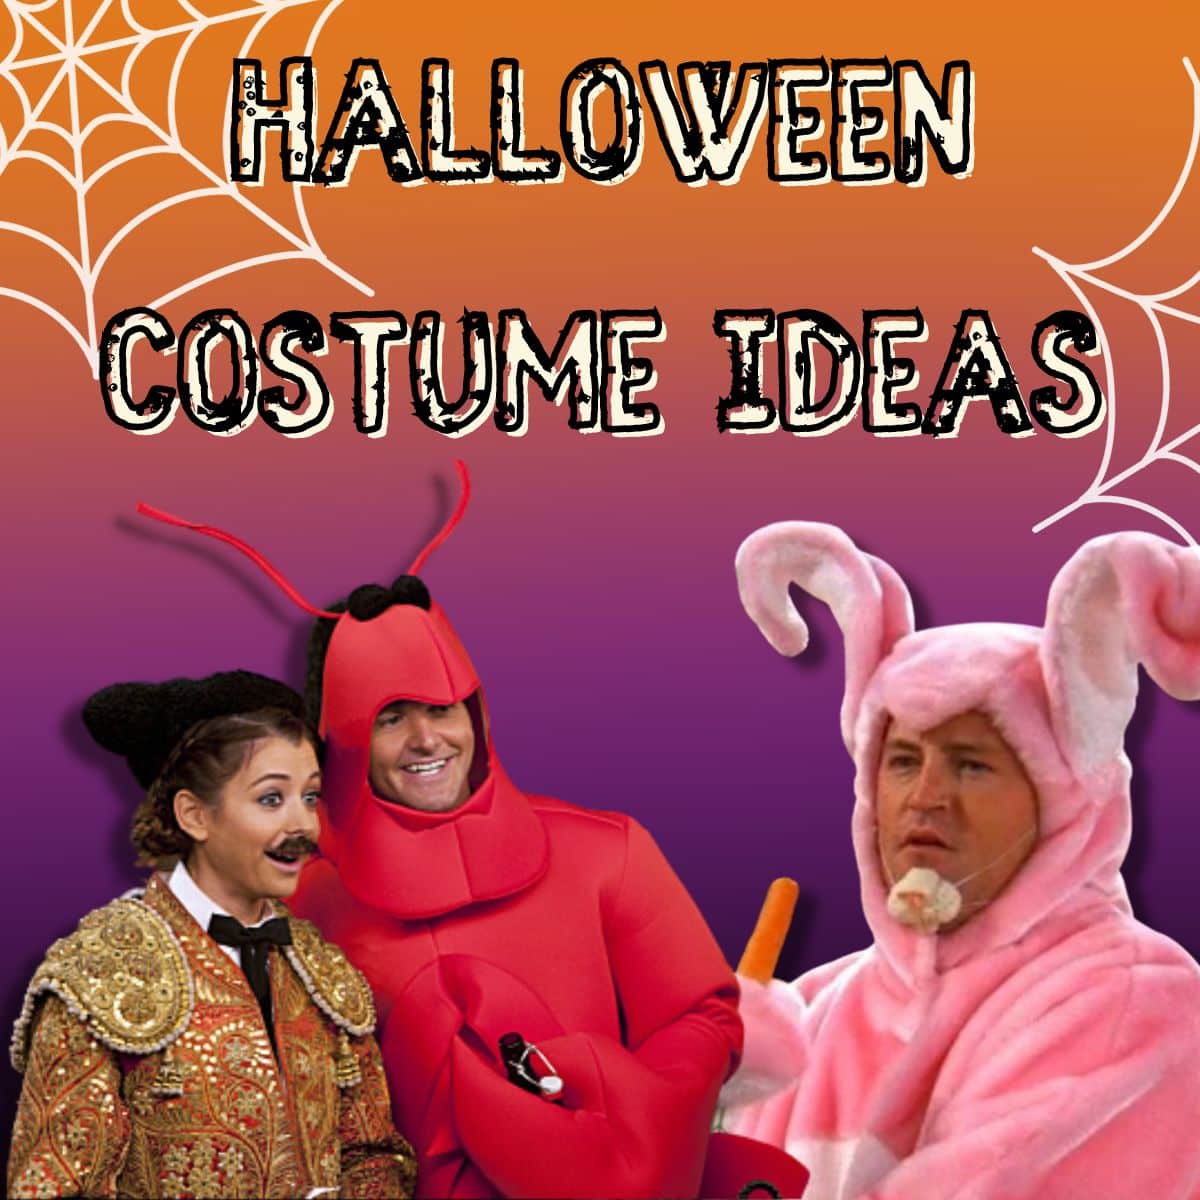 Surprisingly Creative Halloween Costumes That Deserve an Award